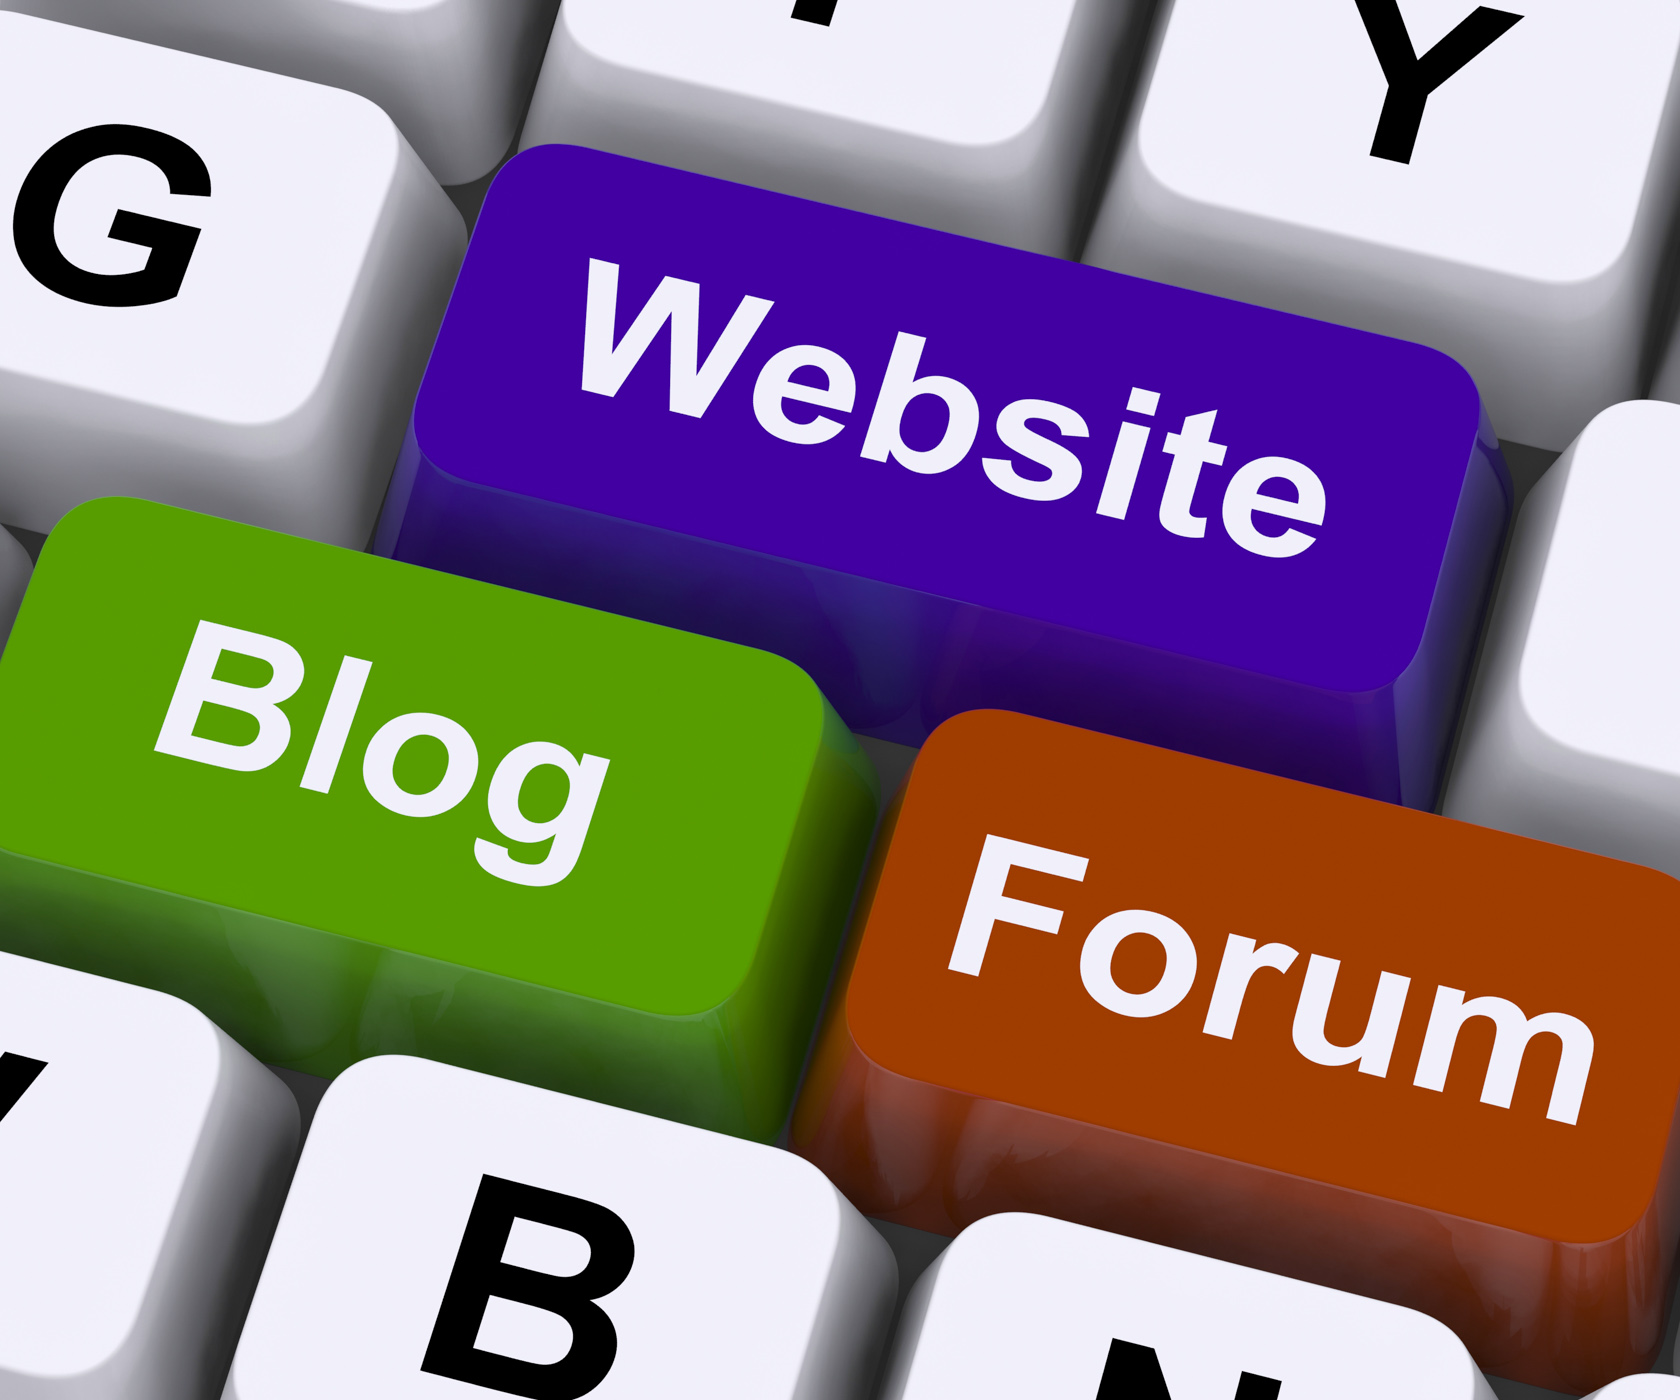 Website Blog And Forum Keys Show Internet Or Www, Blog, Internet, Keyboard, Keys, HQ Photo